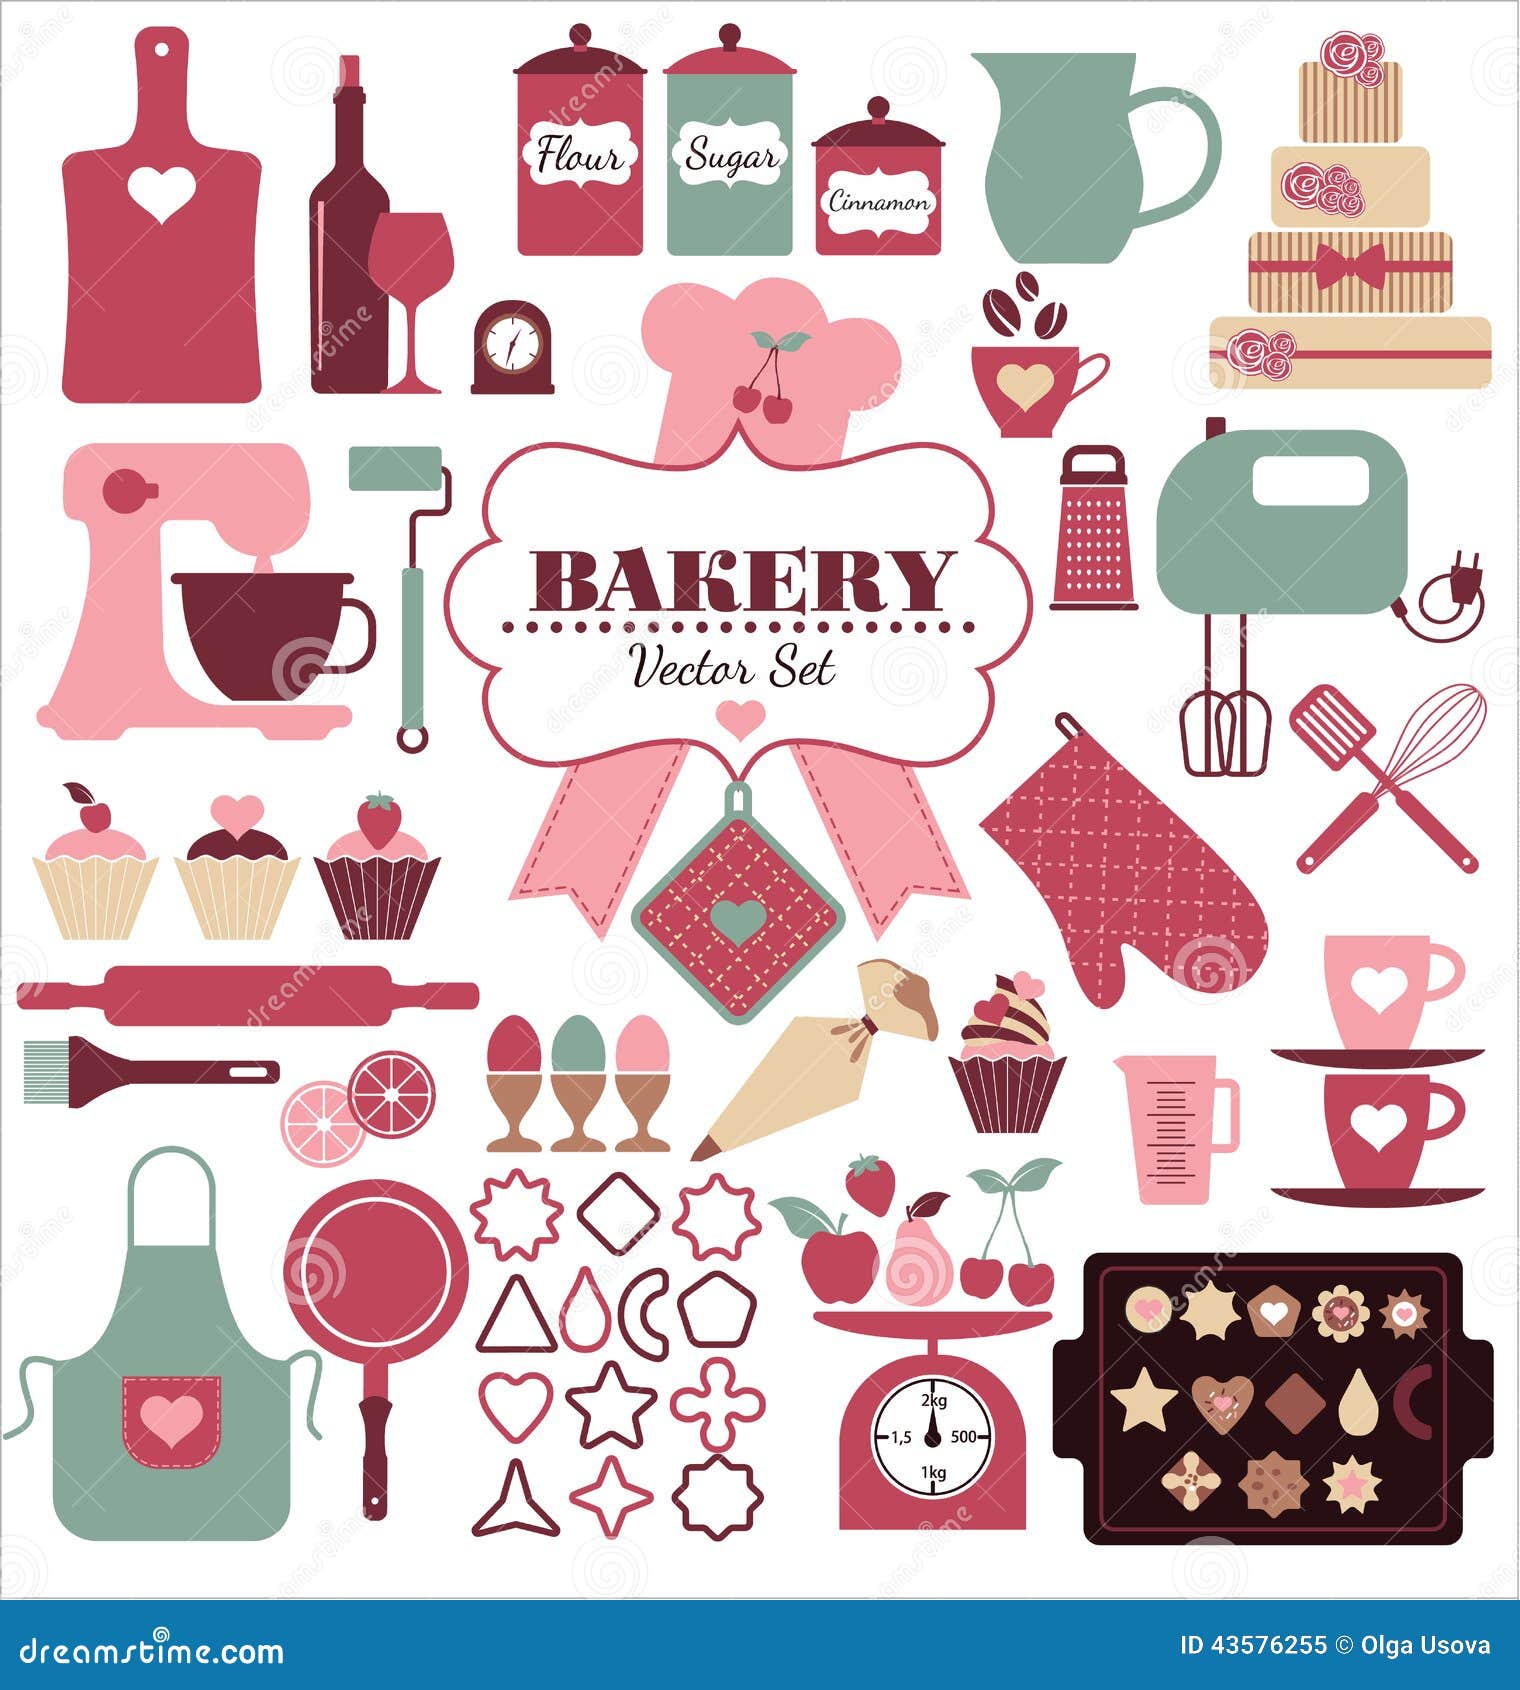 bakery icon set.